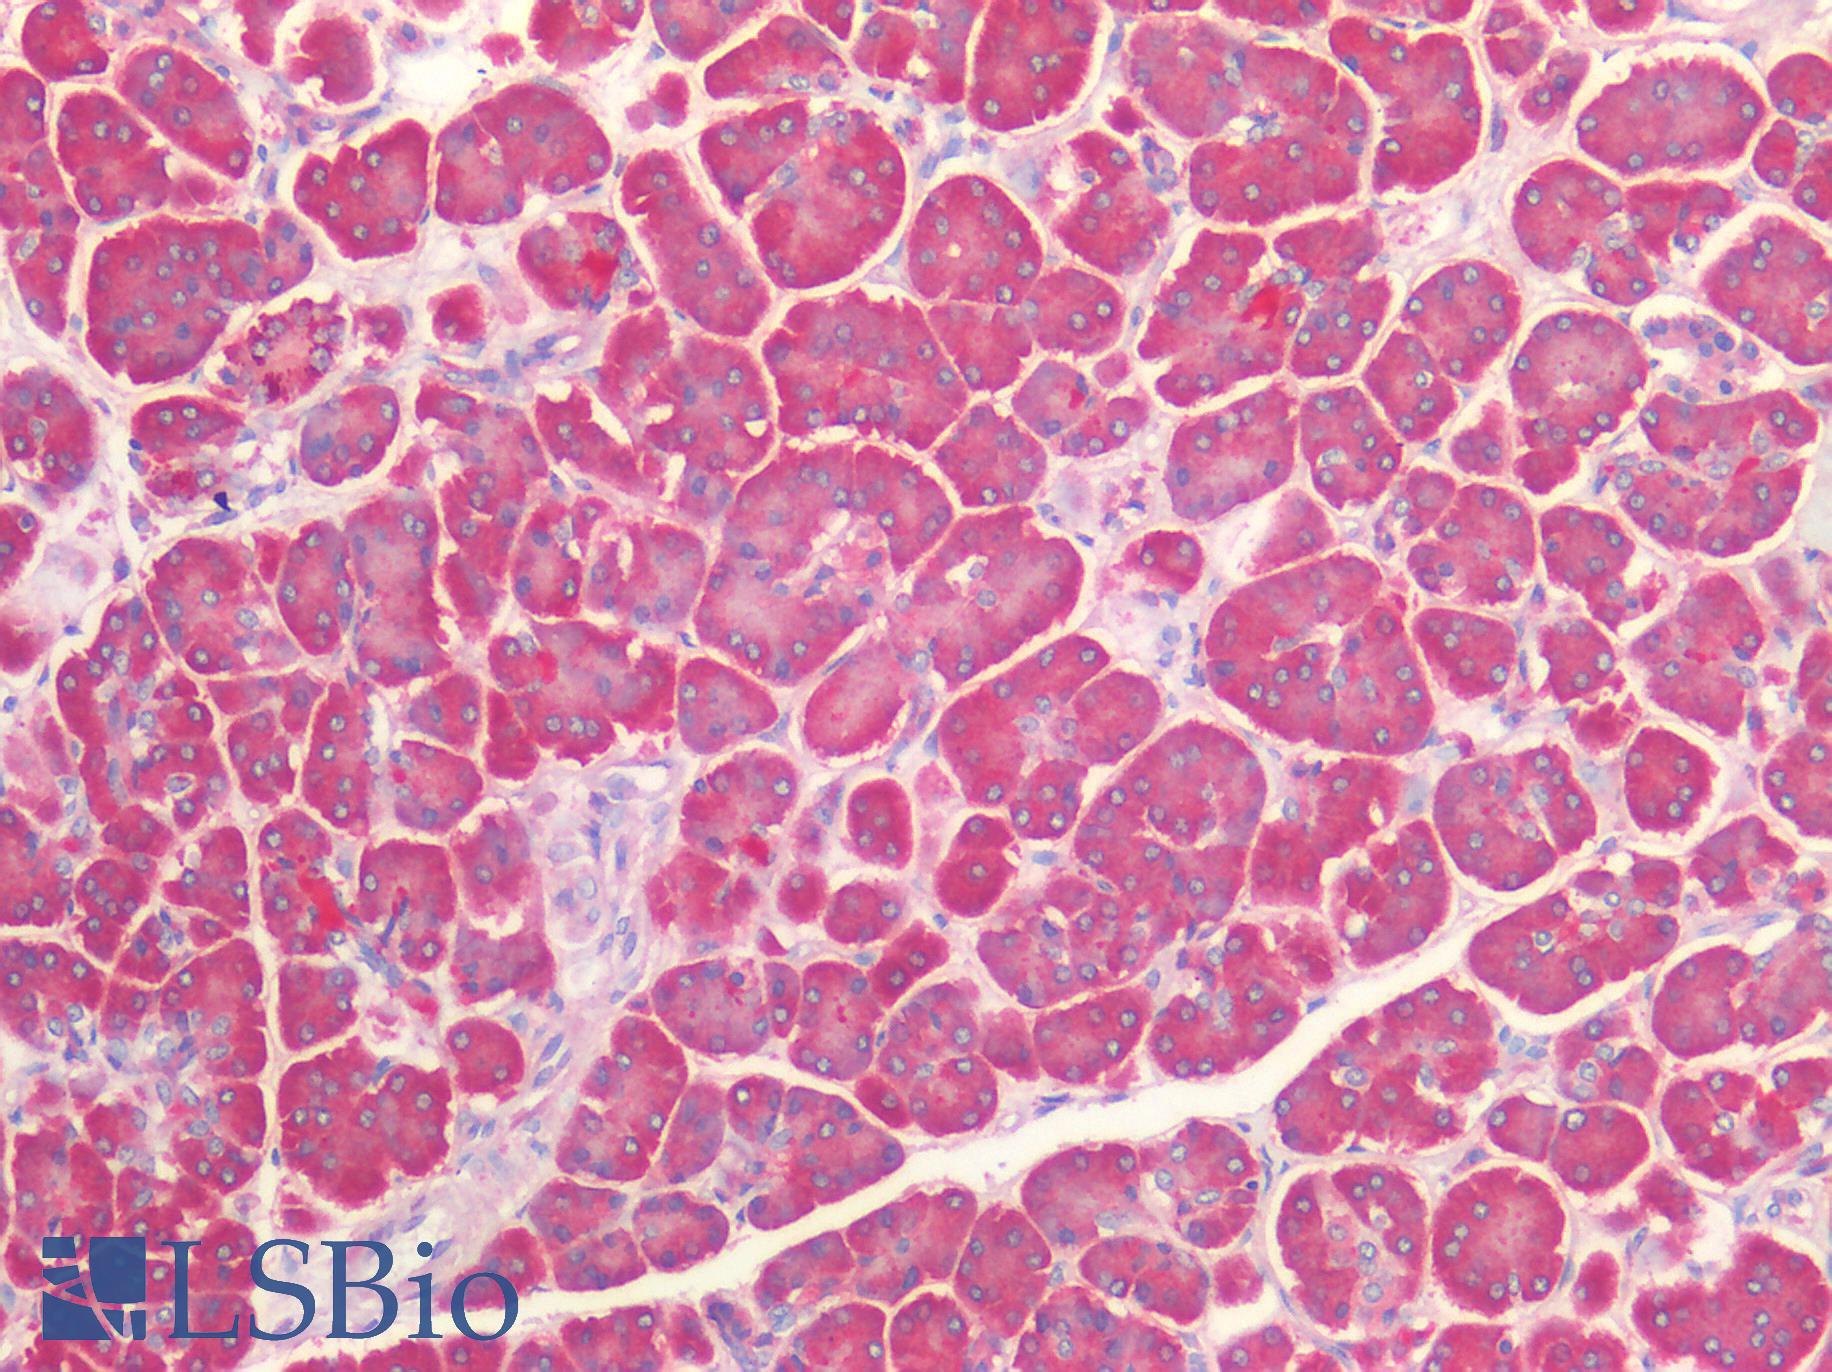 TNC / Tenascin C Antibody - Human Pancreas: Formalin-Fixed, Paraffin-Embedded (FFPE)